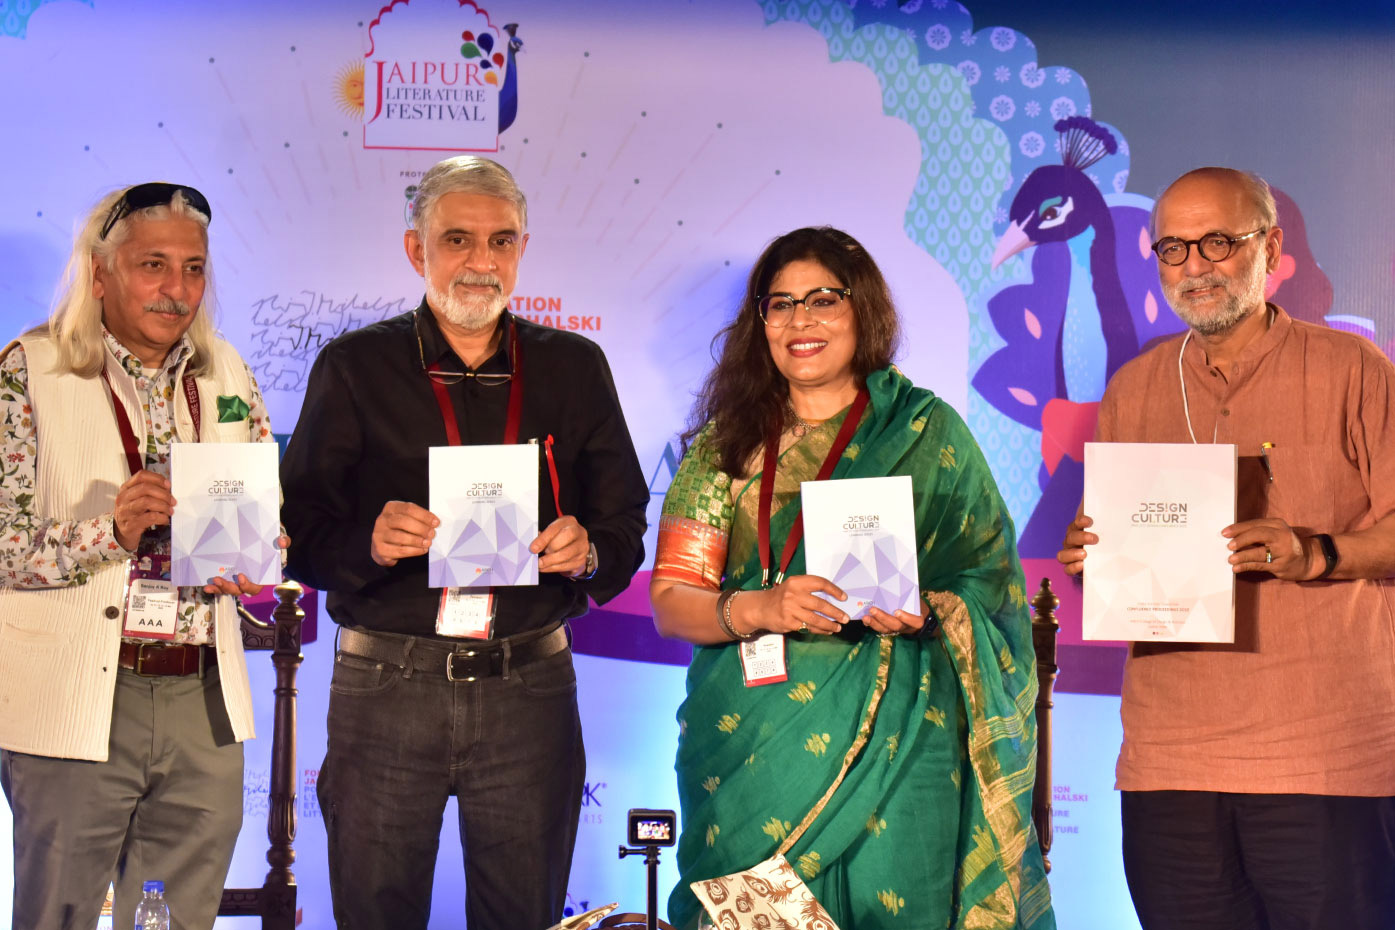 Panel Discussion at the Jaipur Literature Festival